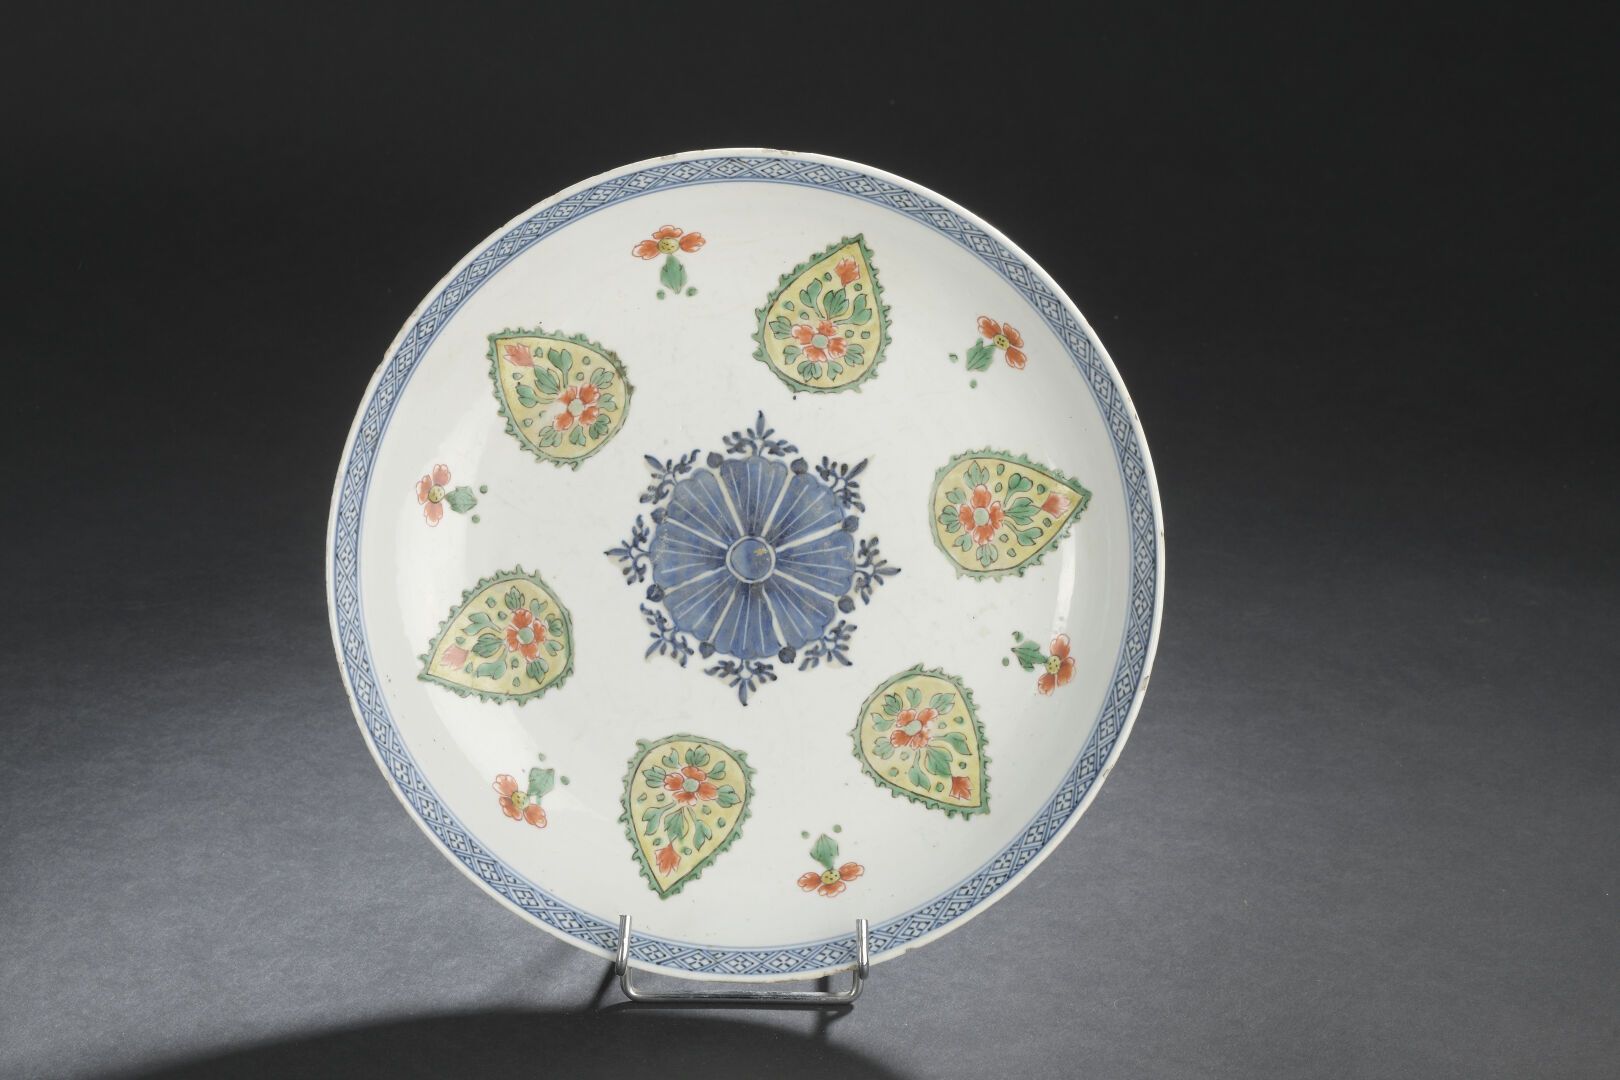 Null Coppa vuota in porcellana Wucai
CINA, periodo Kangxi (1662-1722)
Decorata c&hellip;